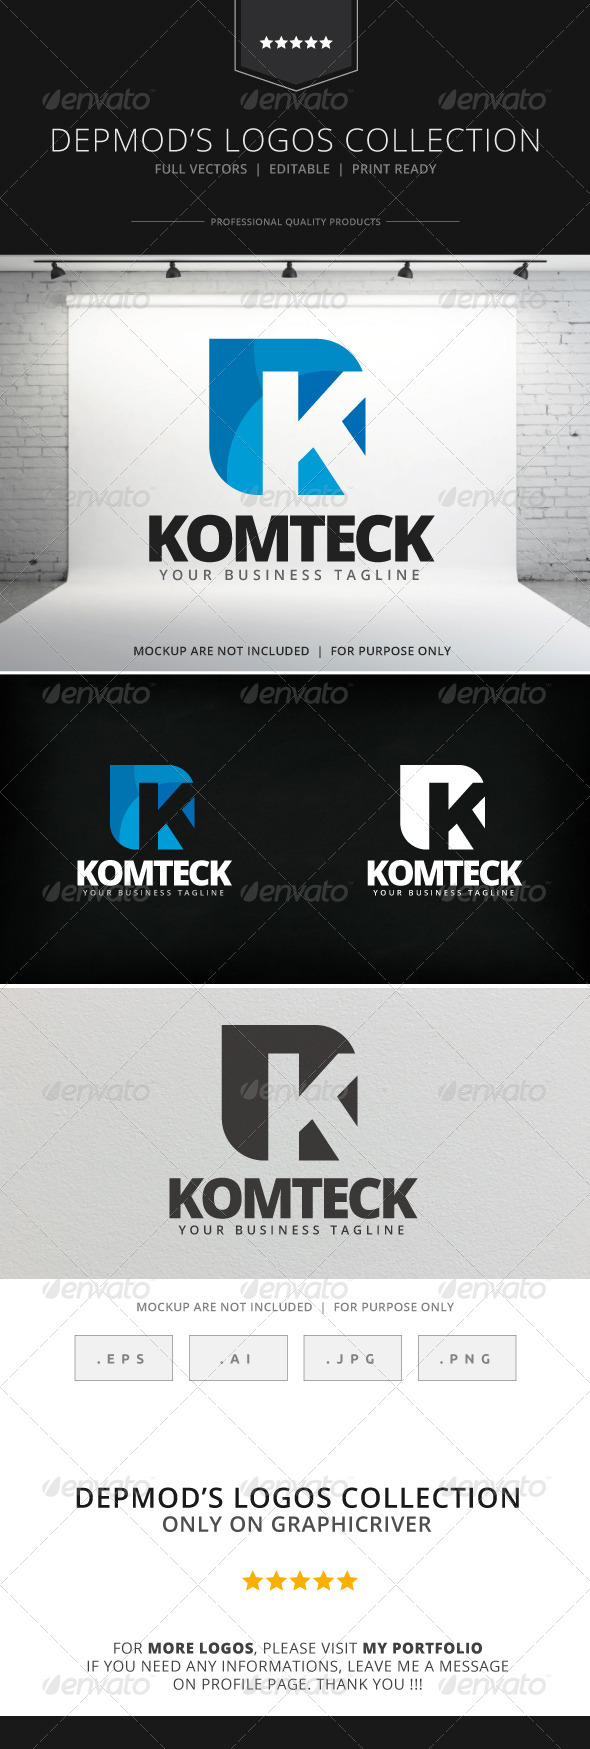 Komteck Logo